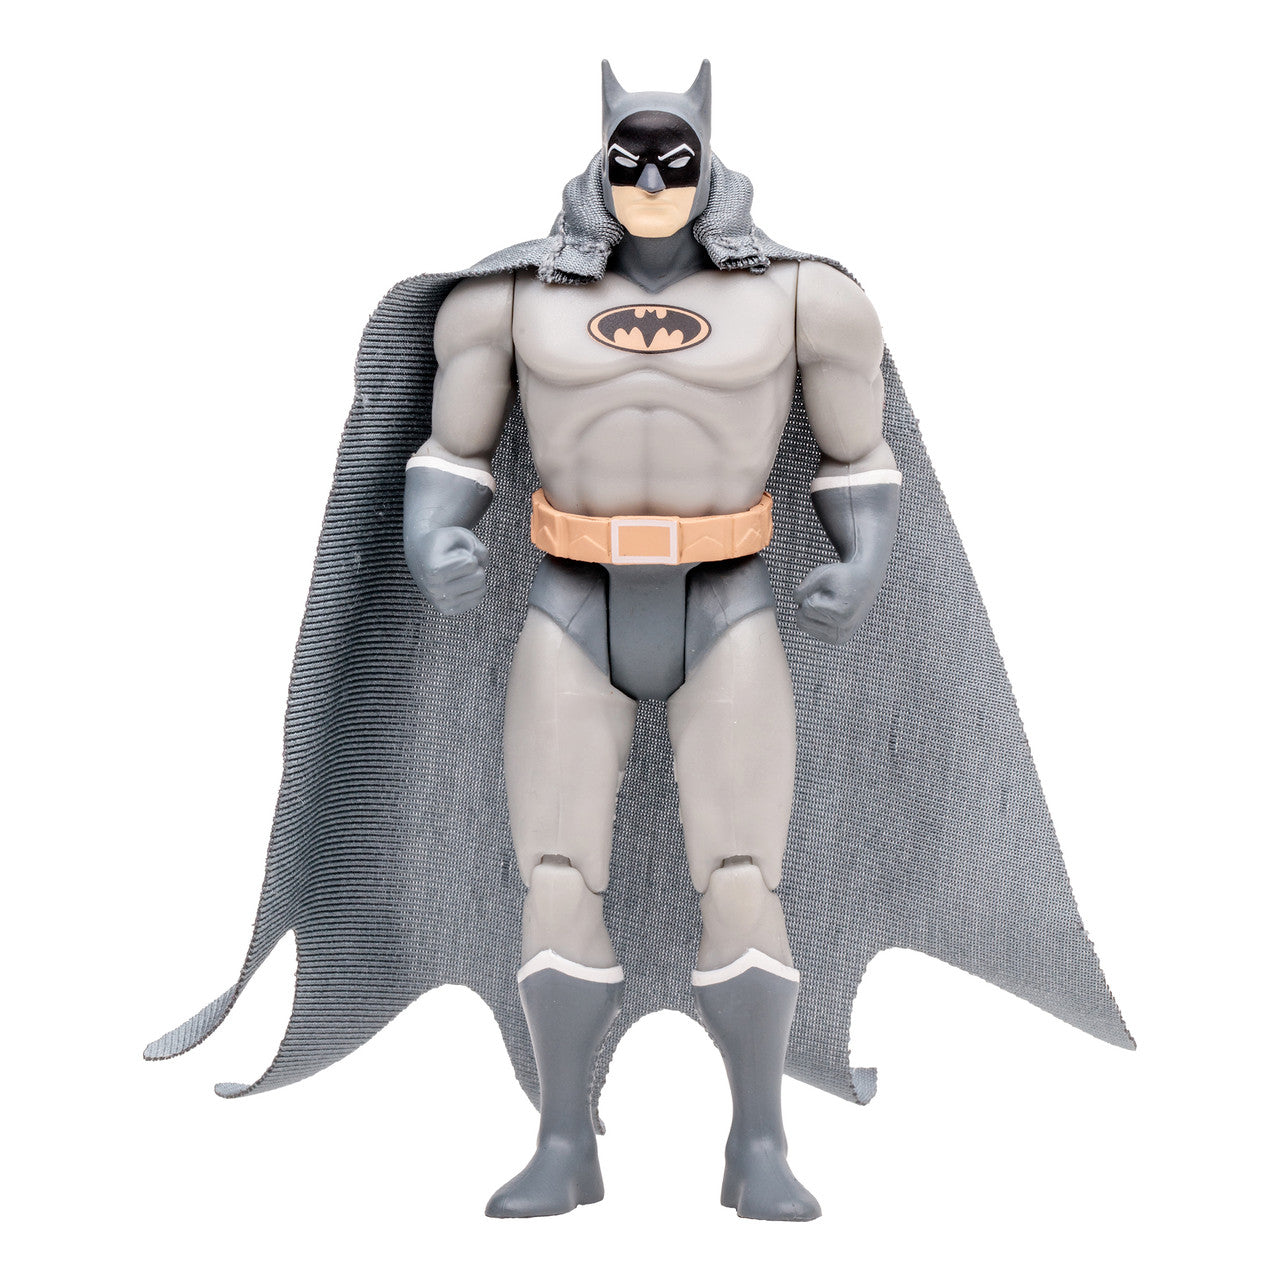 DC Super Powers Batman: Manga  4.5" Action Figure Toy